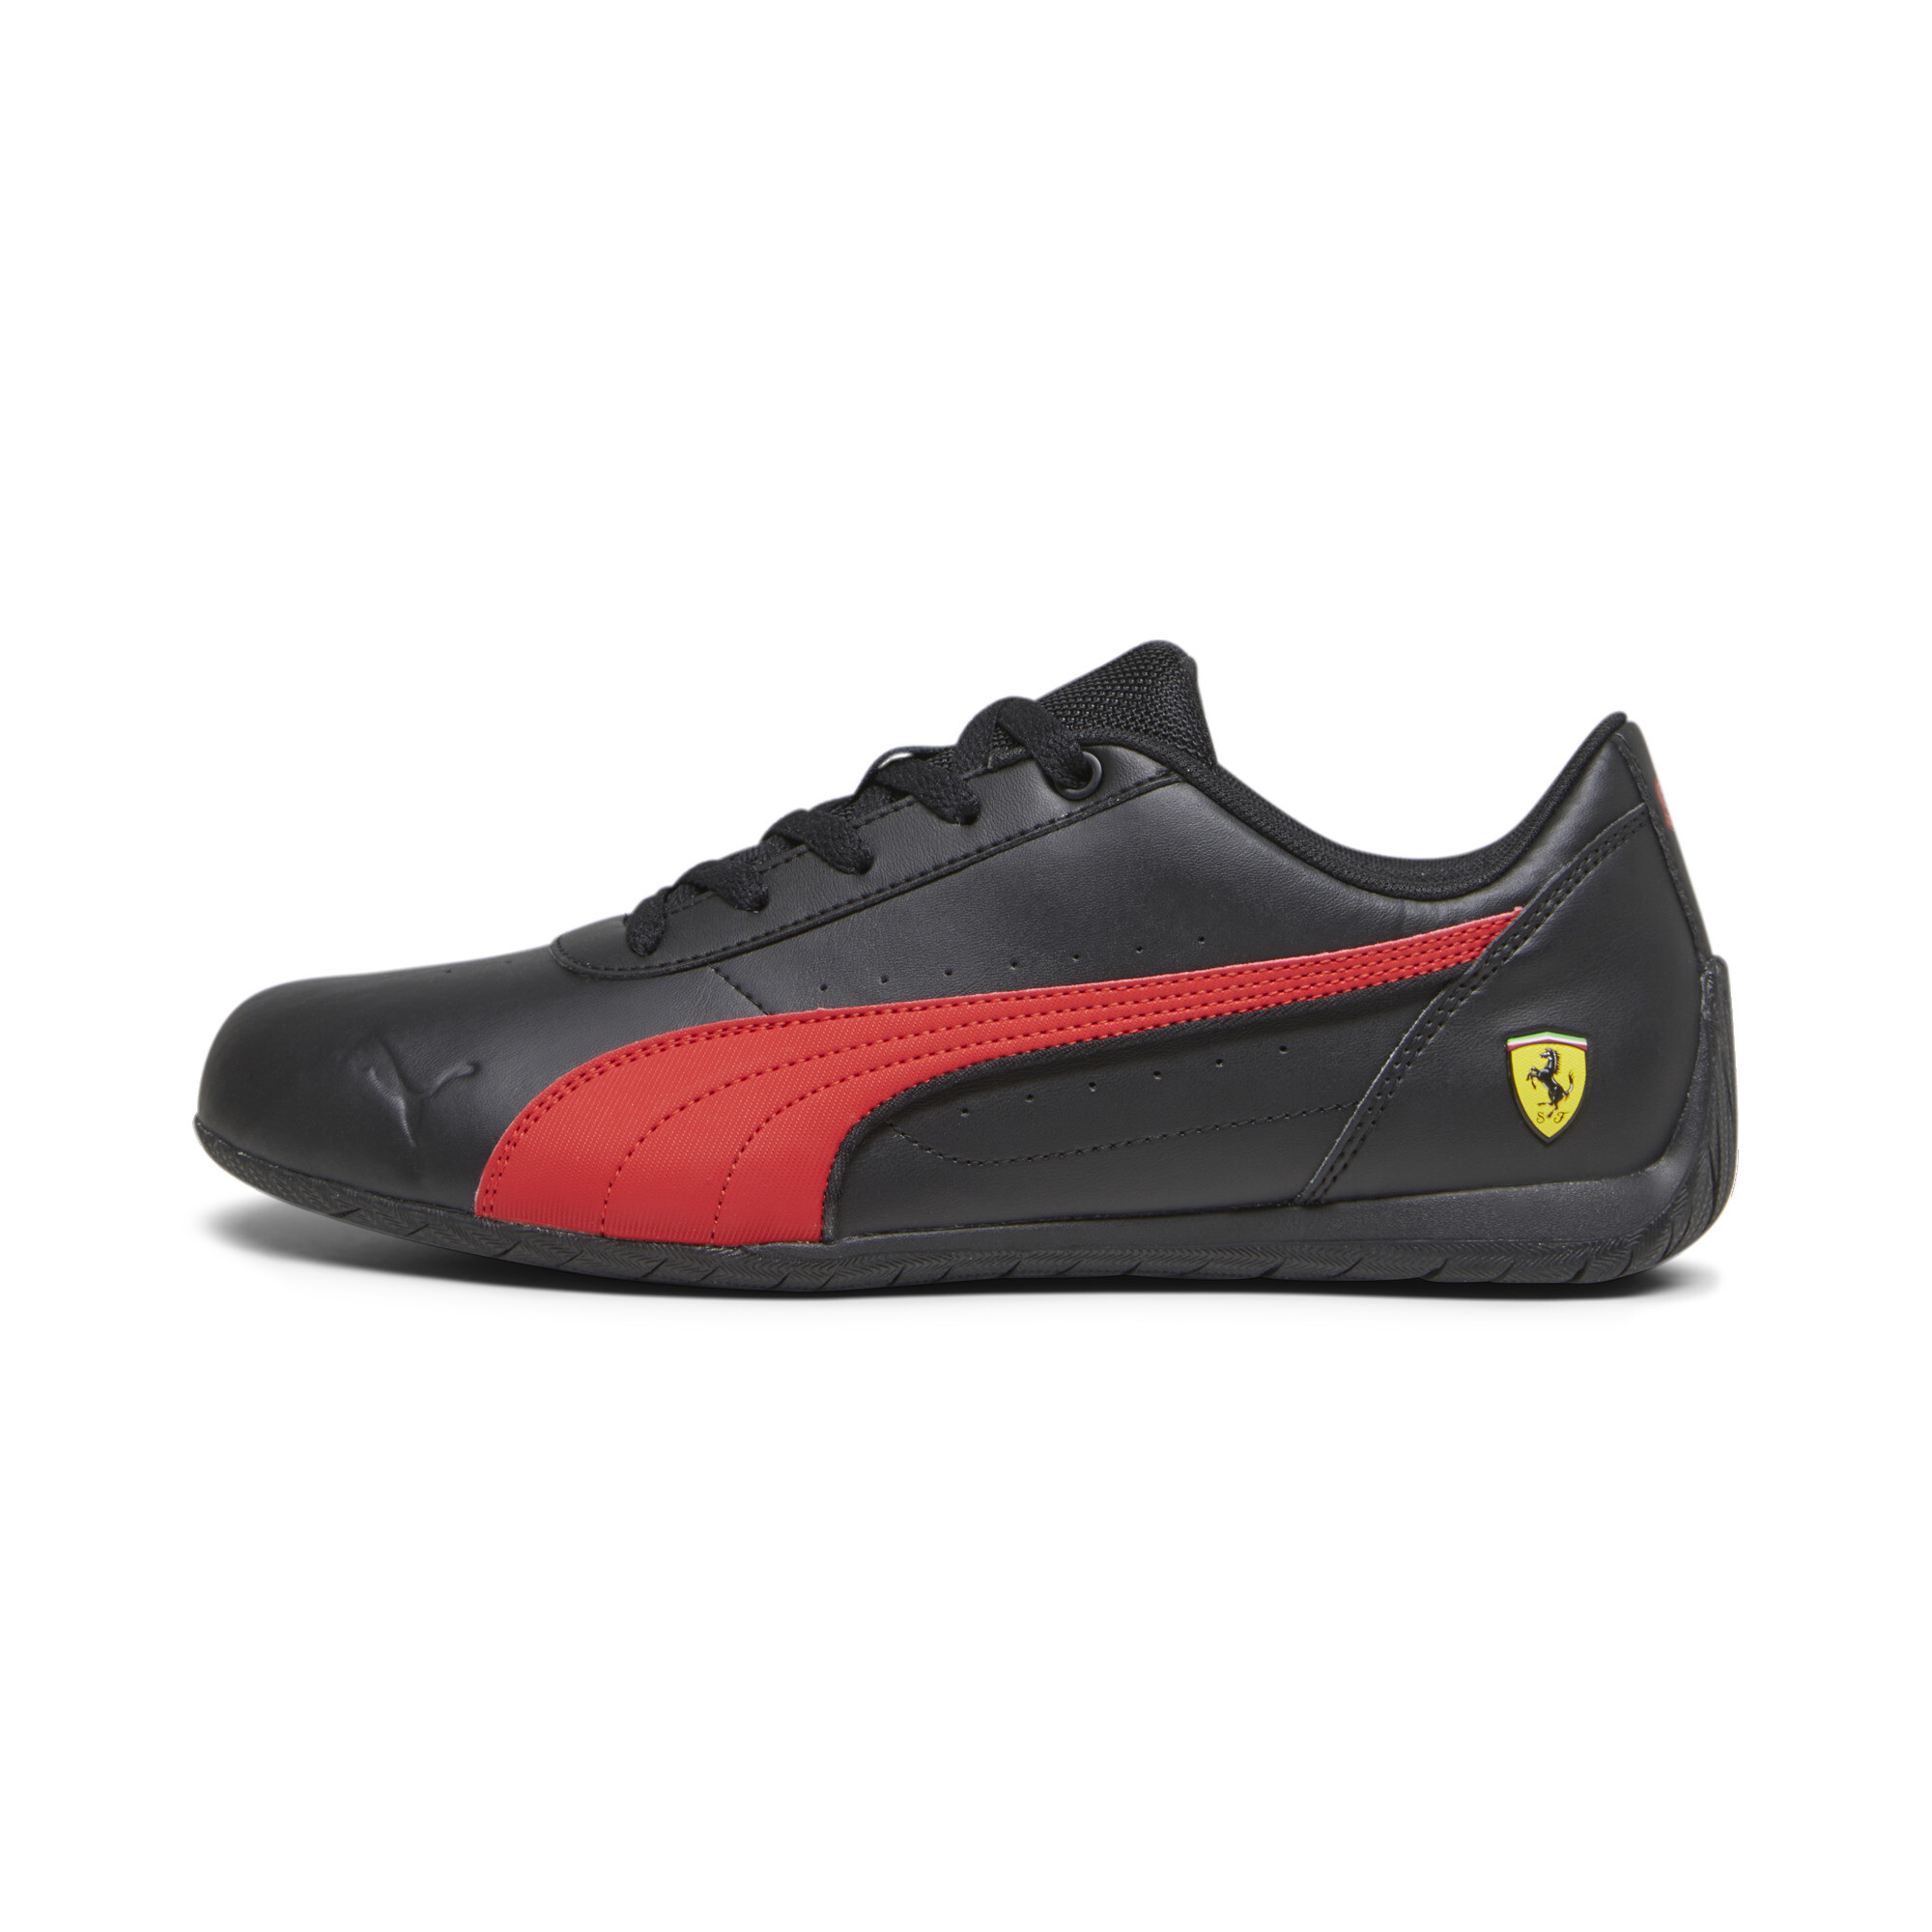 PUMA Men's Scuderia Ferrari Neo Cat Driving Shoes | eBay